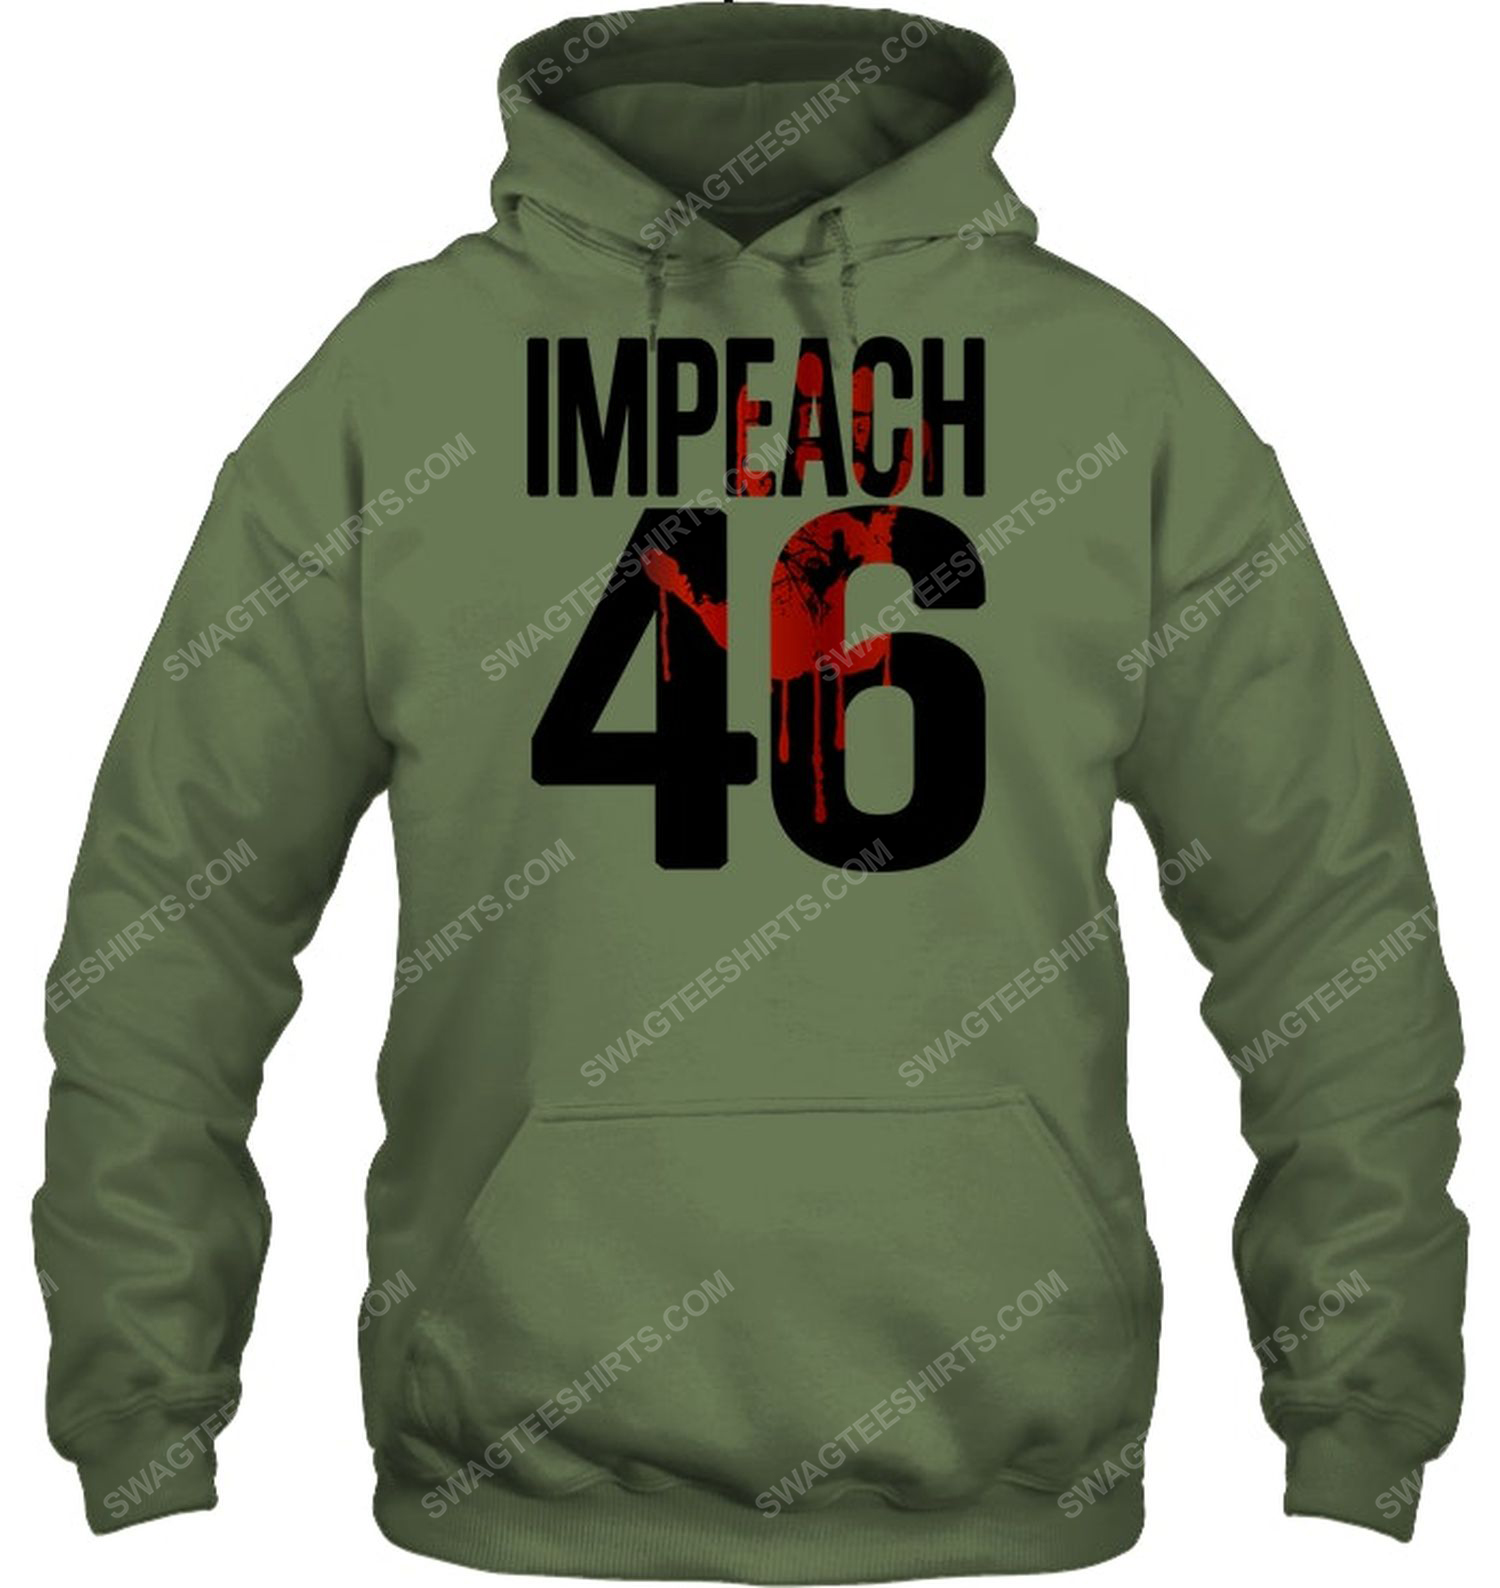 Impeach 46 blood halloween political hoodie